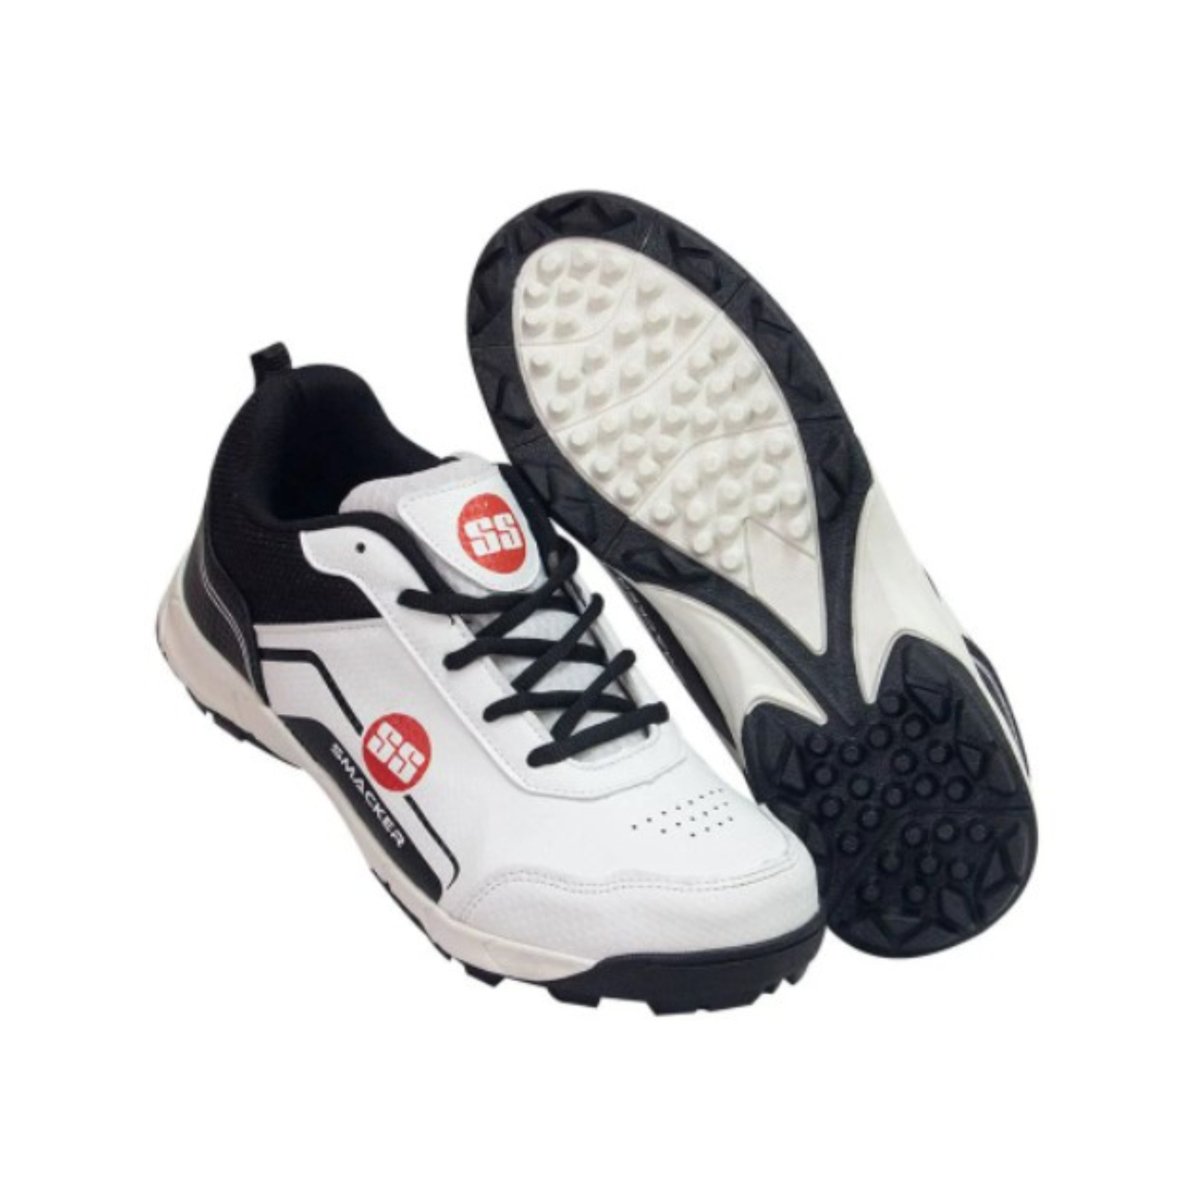 SS Smacker Cricket Shoes - Black White - Acrux Sports